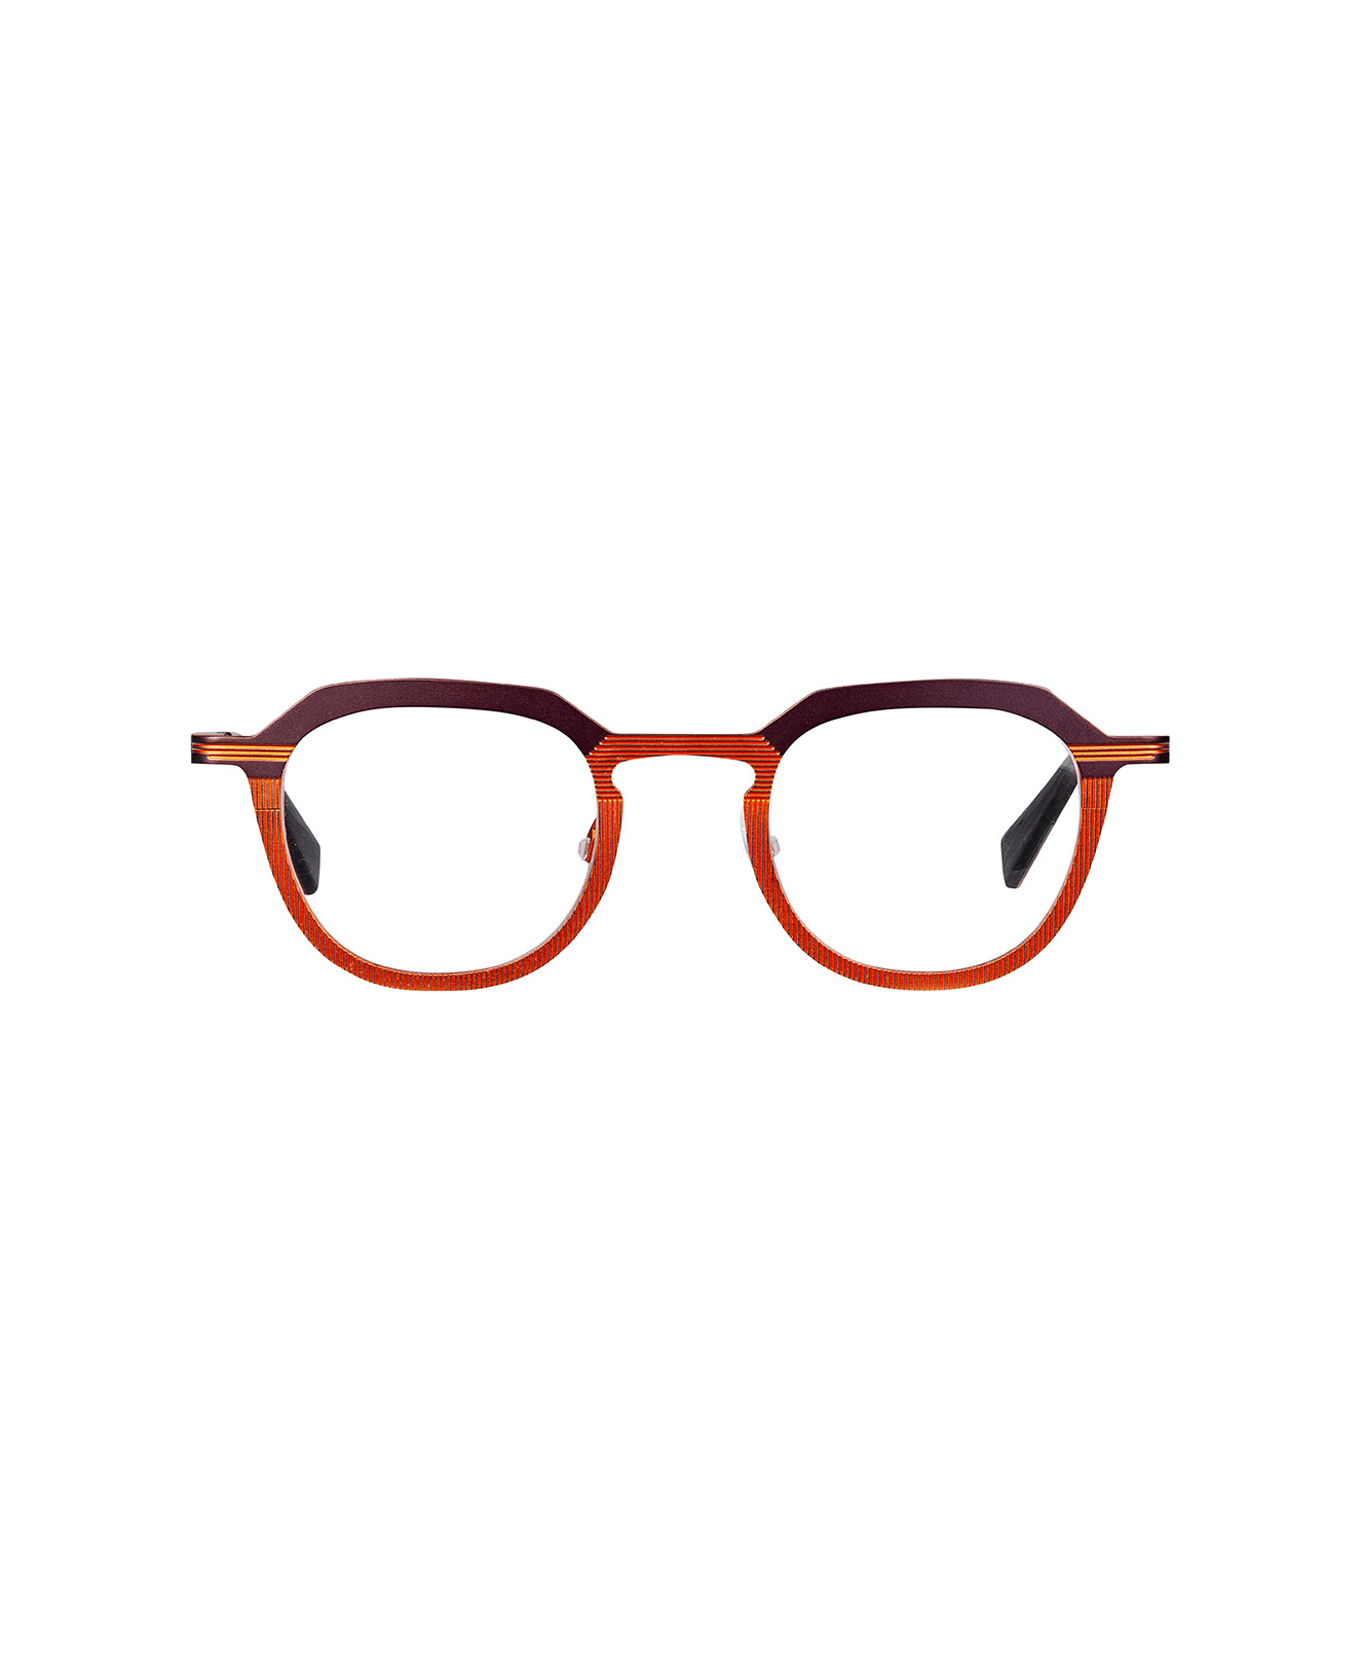 Matttew Euler Glasses - Arancione アイウェア